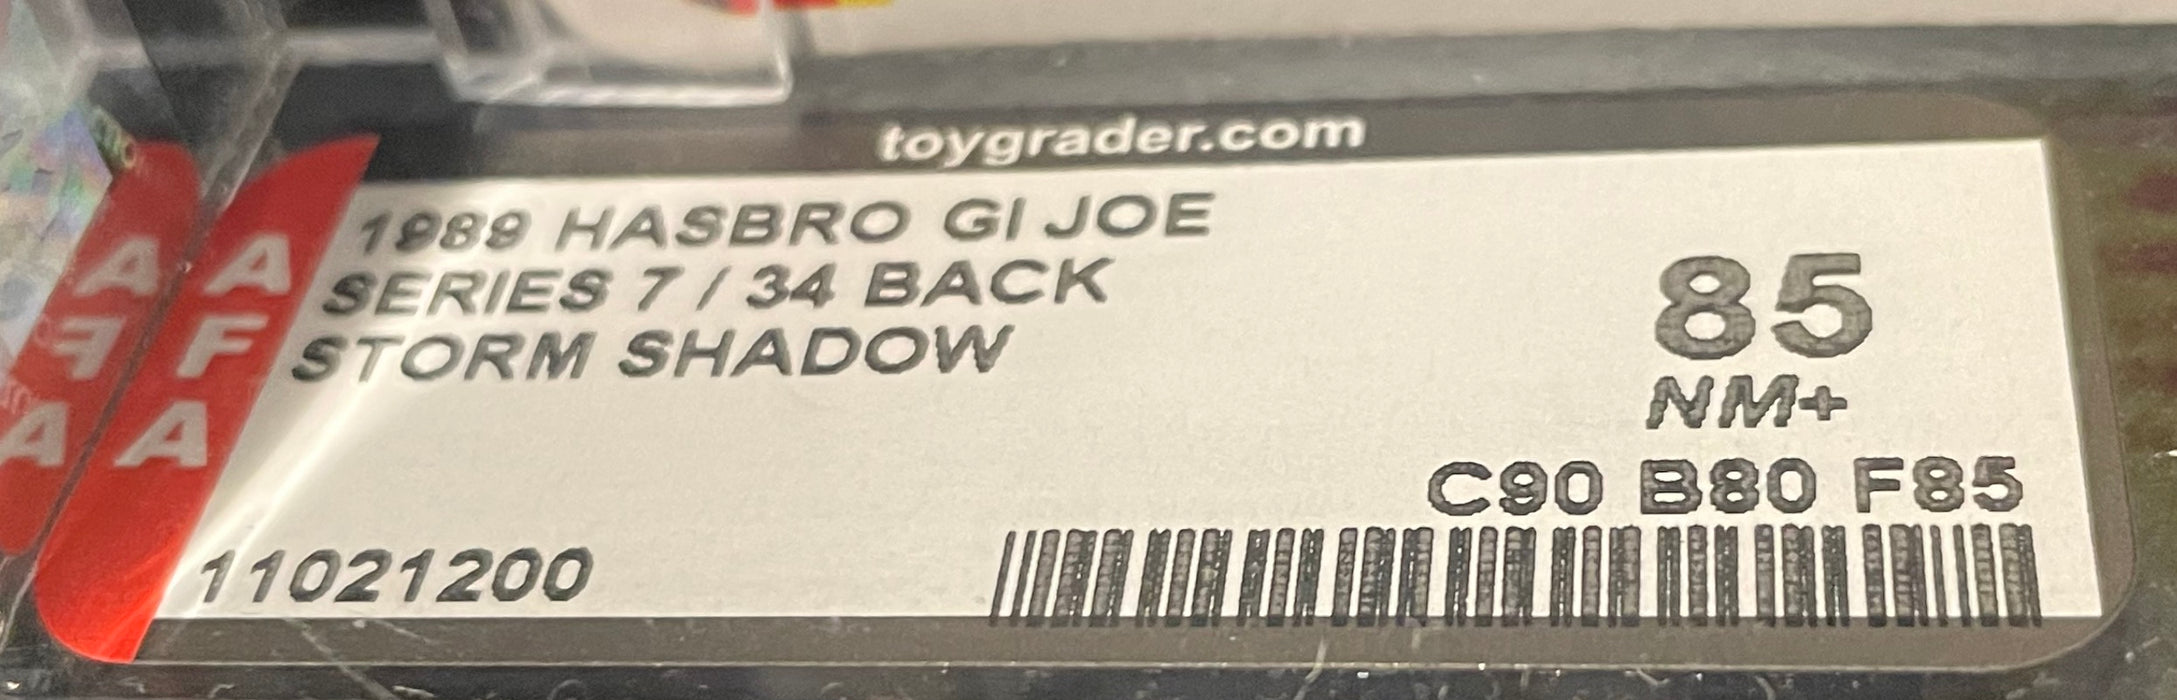 Hasbro G.I. Joe Storm Shadow Series 7 / 34 Back AFA 85